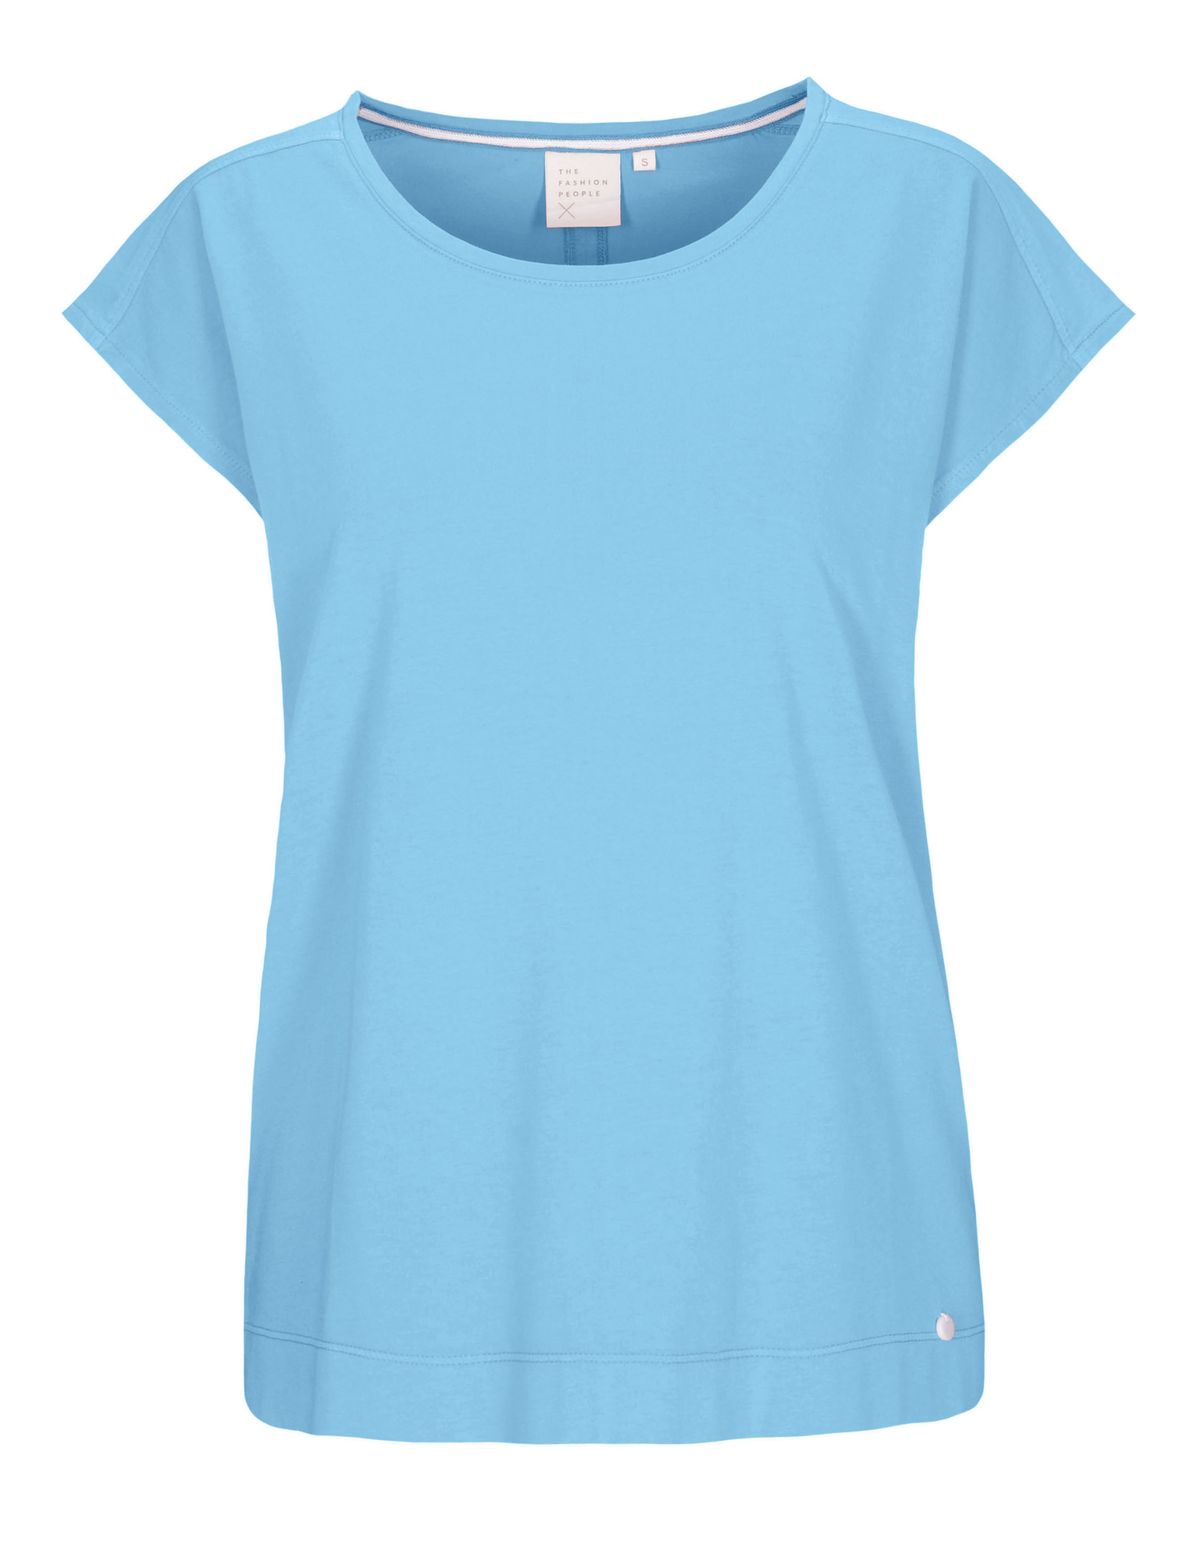 T-Shirt Rundhals-pacific-blue